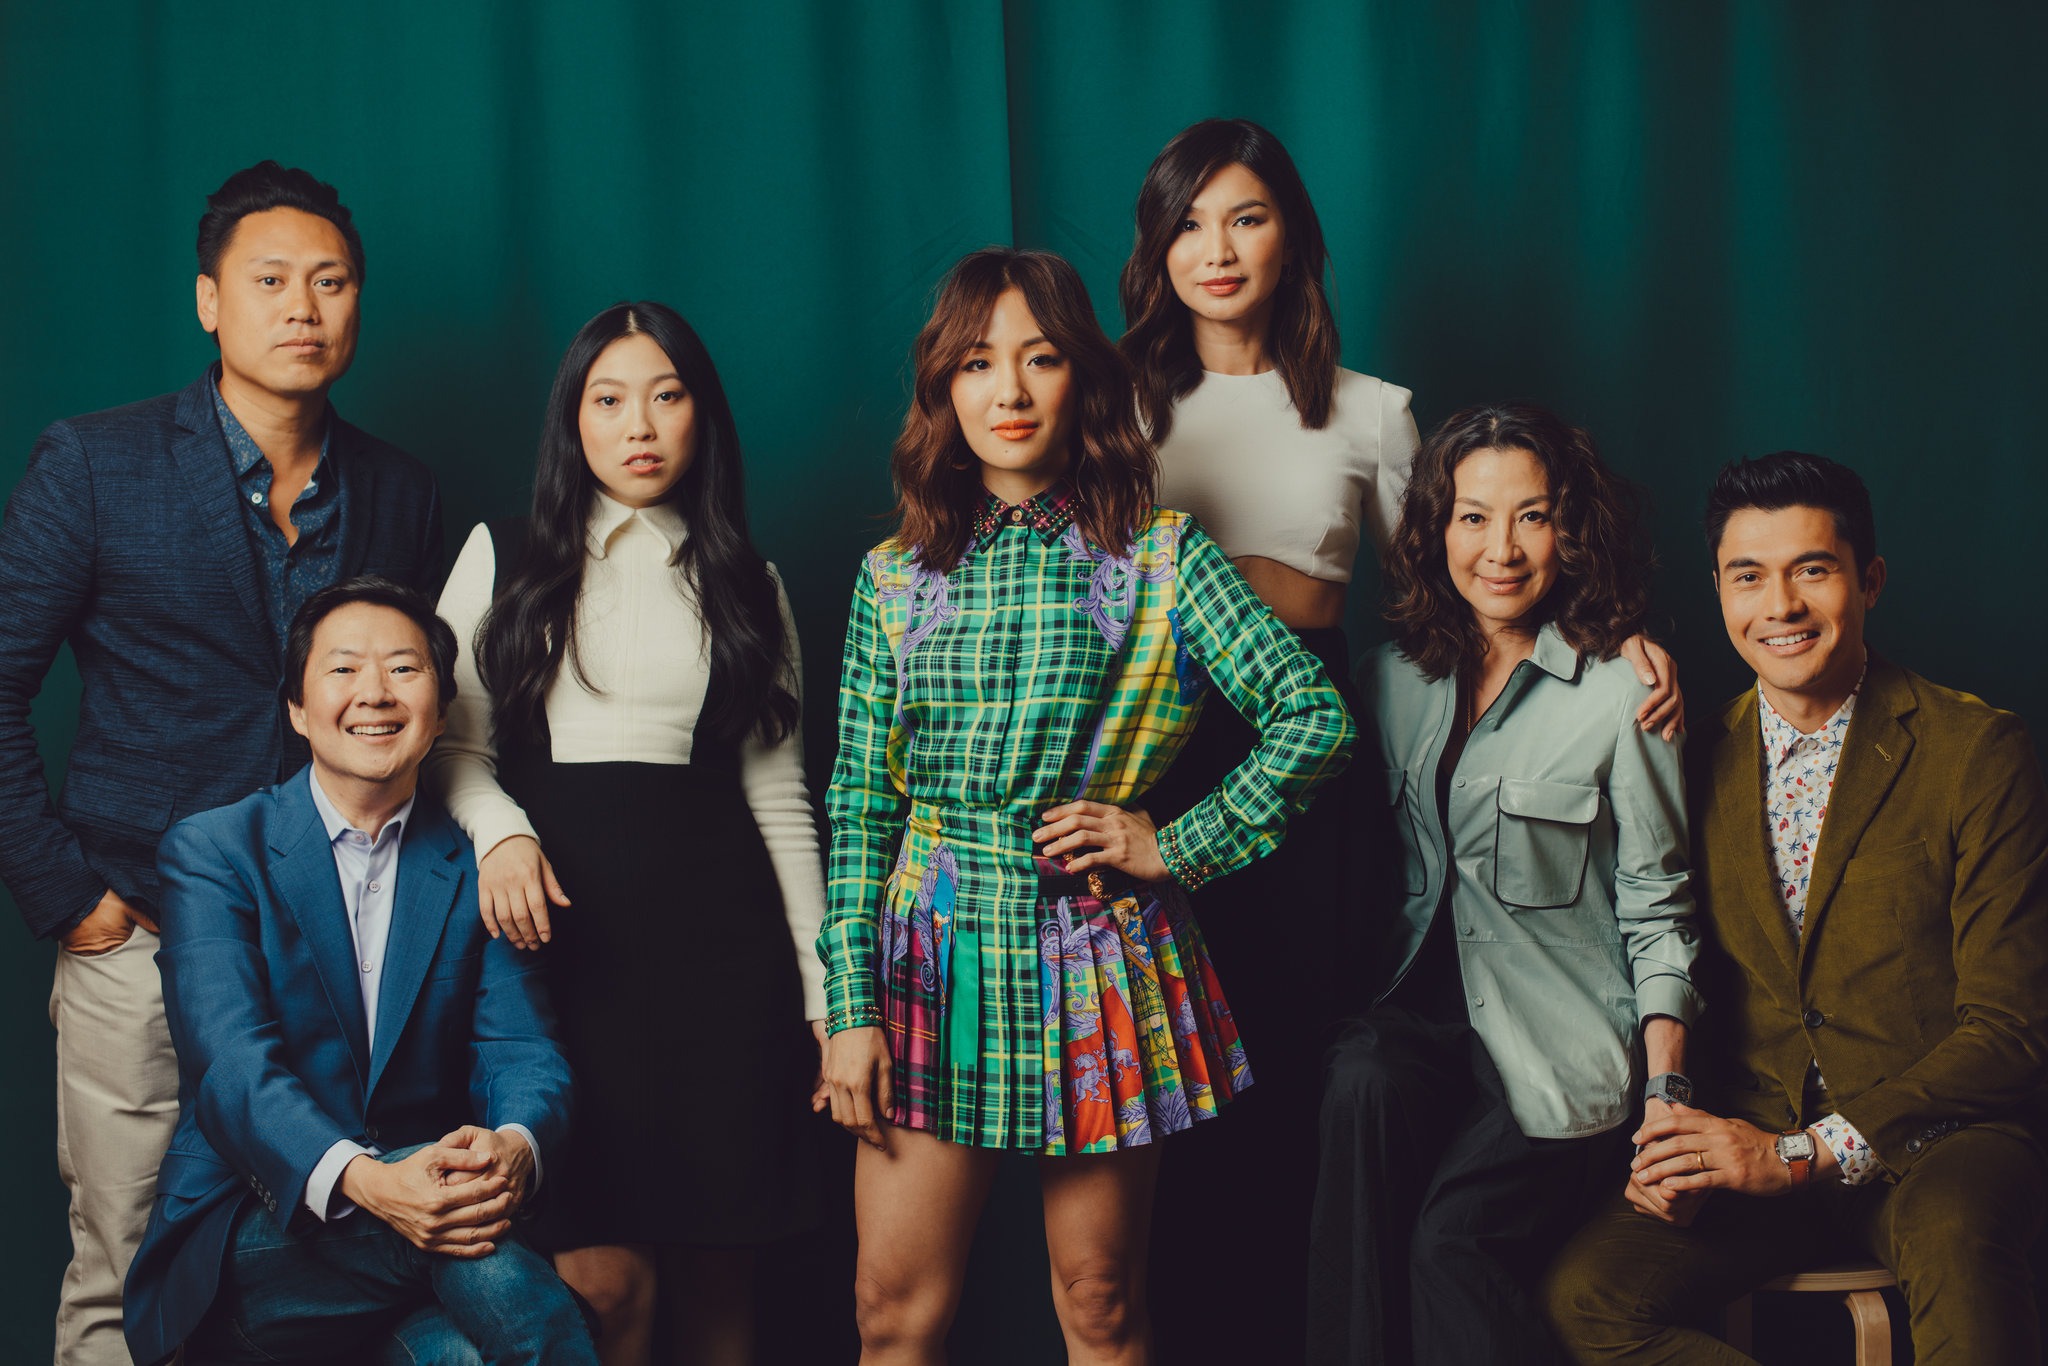 The Asian cast of Crazy Rich Asians